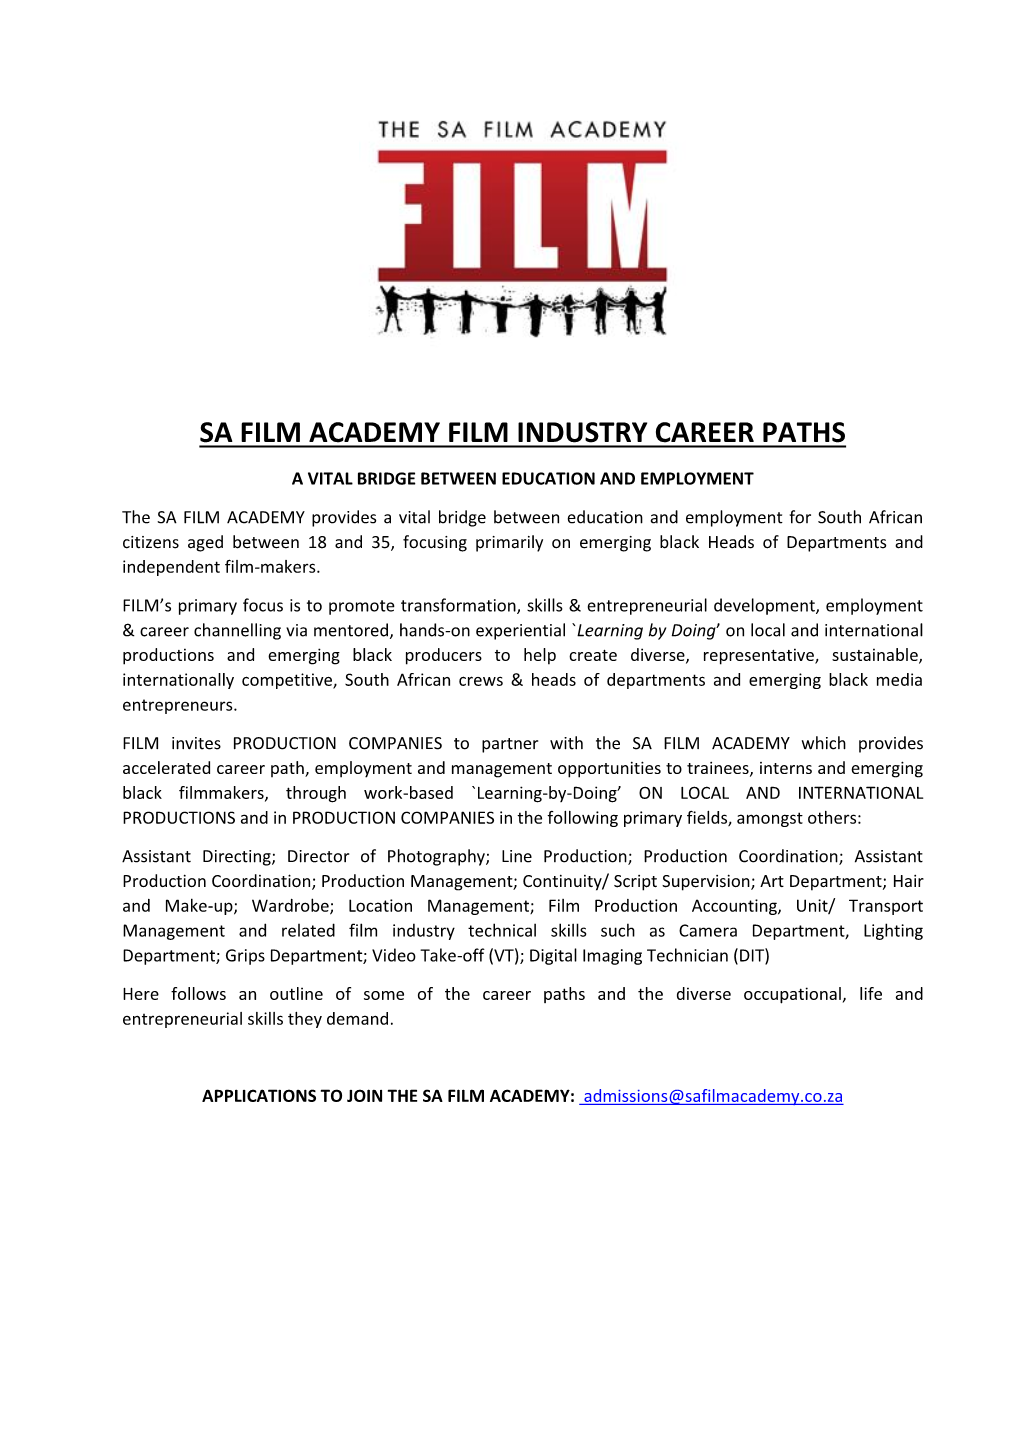 Sa Film Academy Film Industry Career Paths